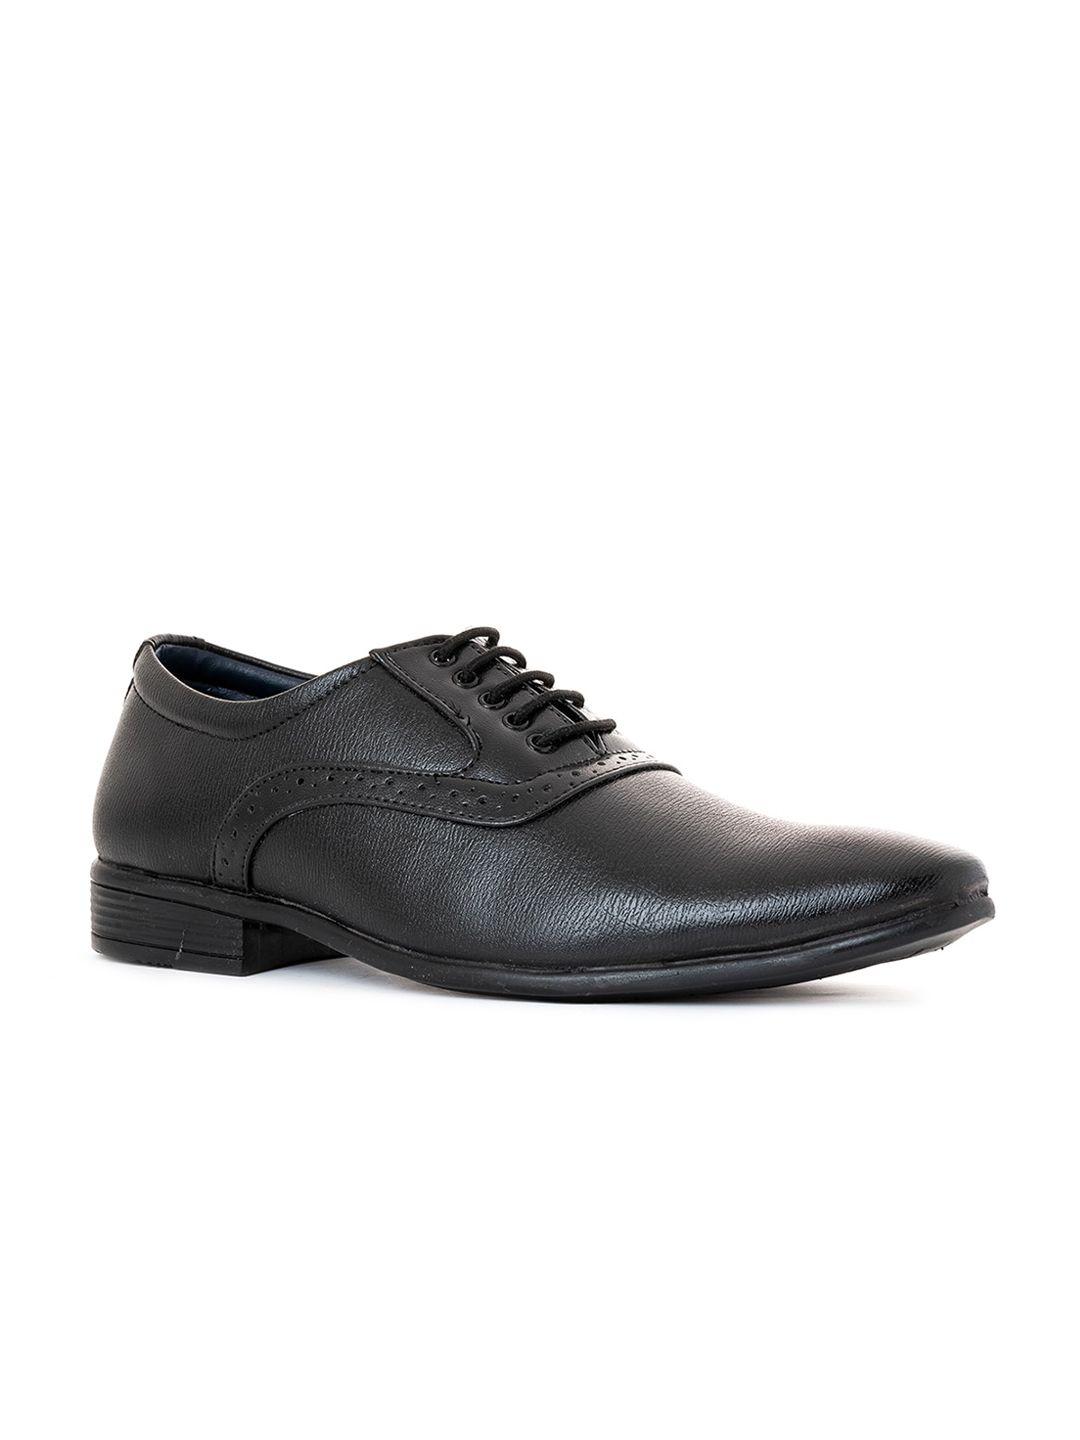 khadims men black oxfords formal shoe